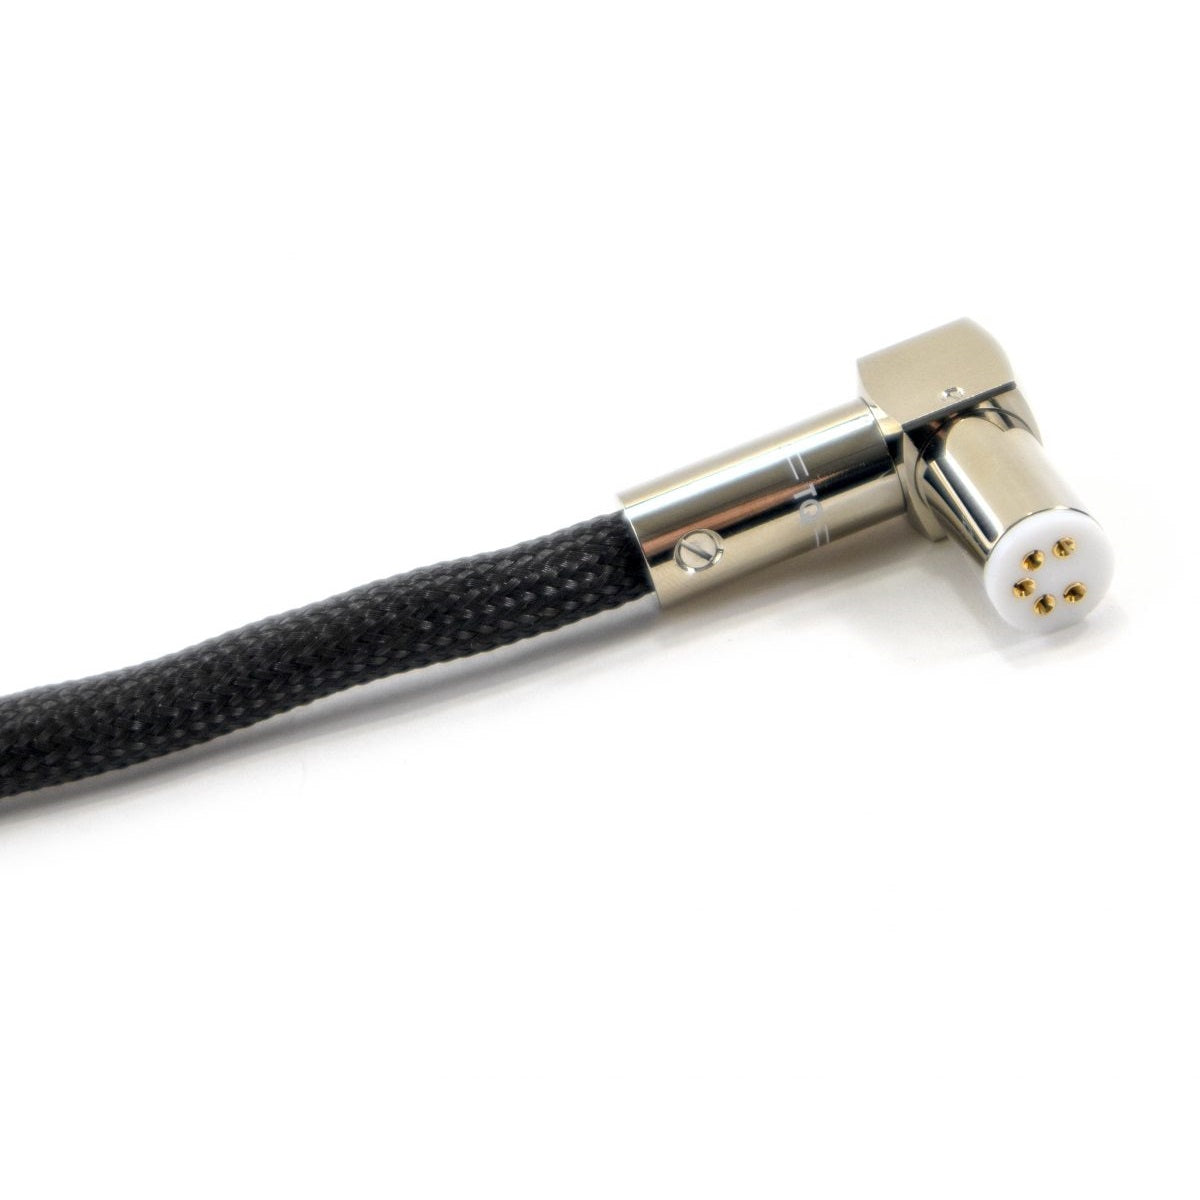 Tellurium Q Ultra Black II DIN-RCA Tone Arm Cable